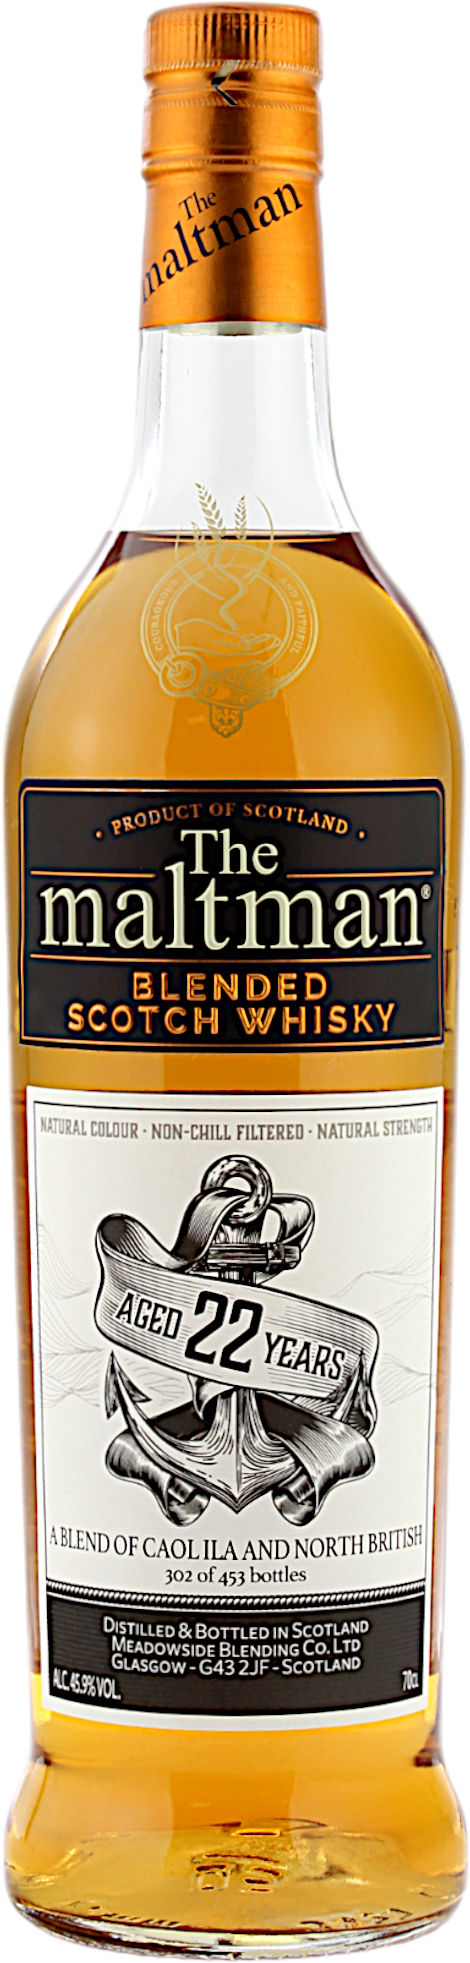 The Maltman Blend North British & Caol Ila 22 Jahre 45.9% 0,7l